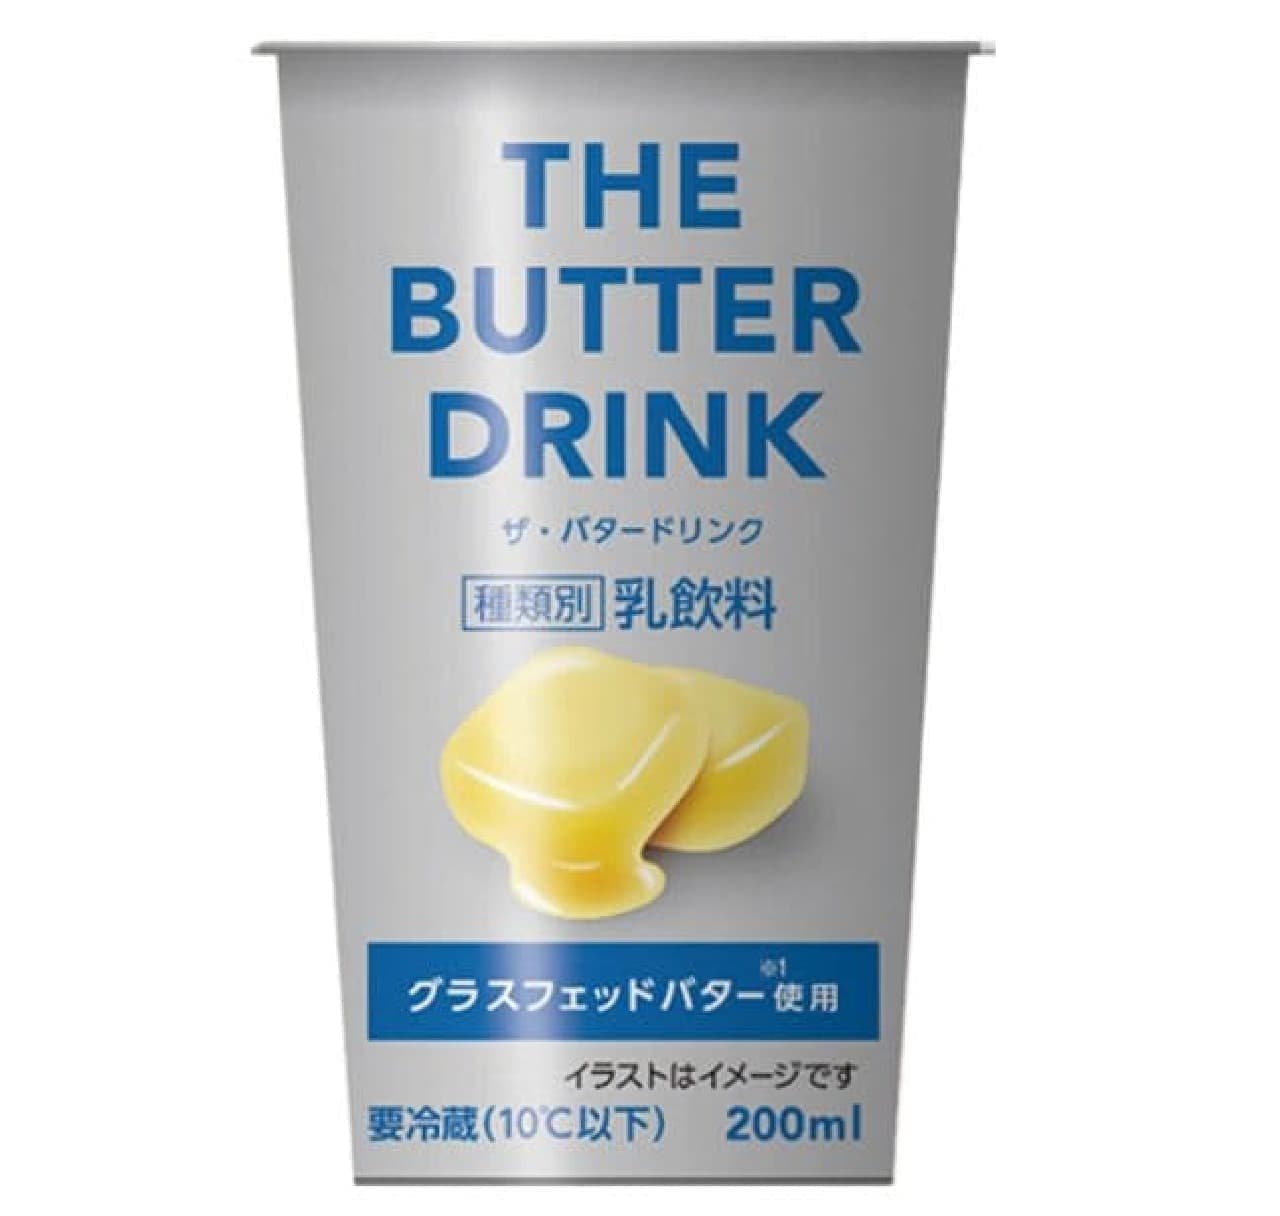 FamilyMart "The Butter Drink